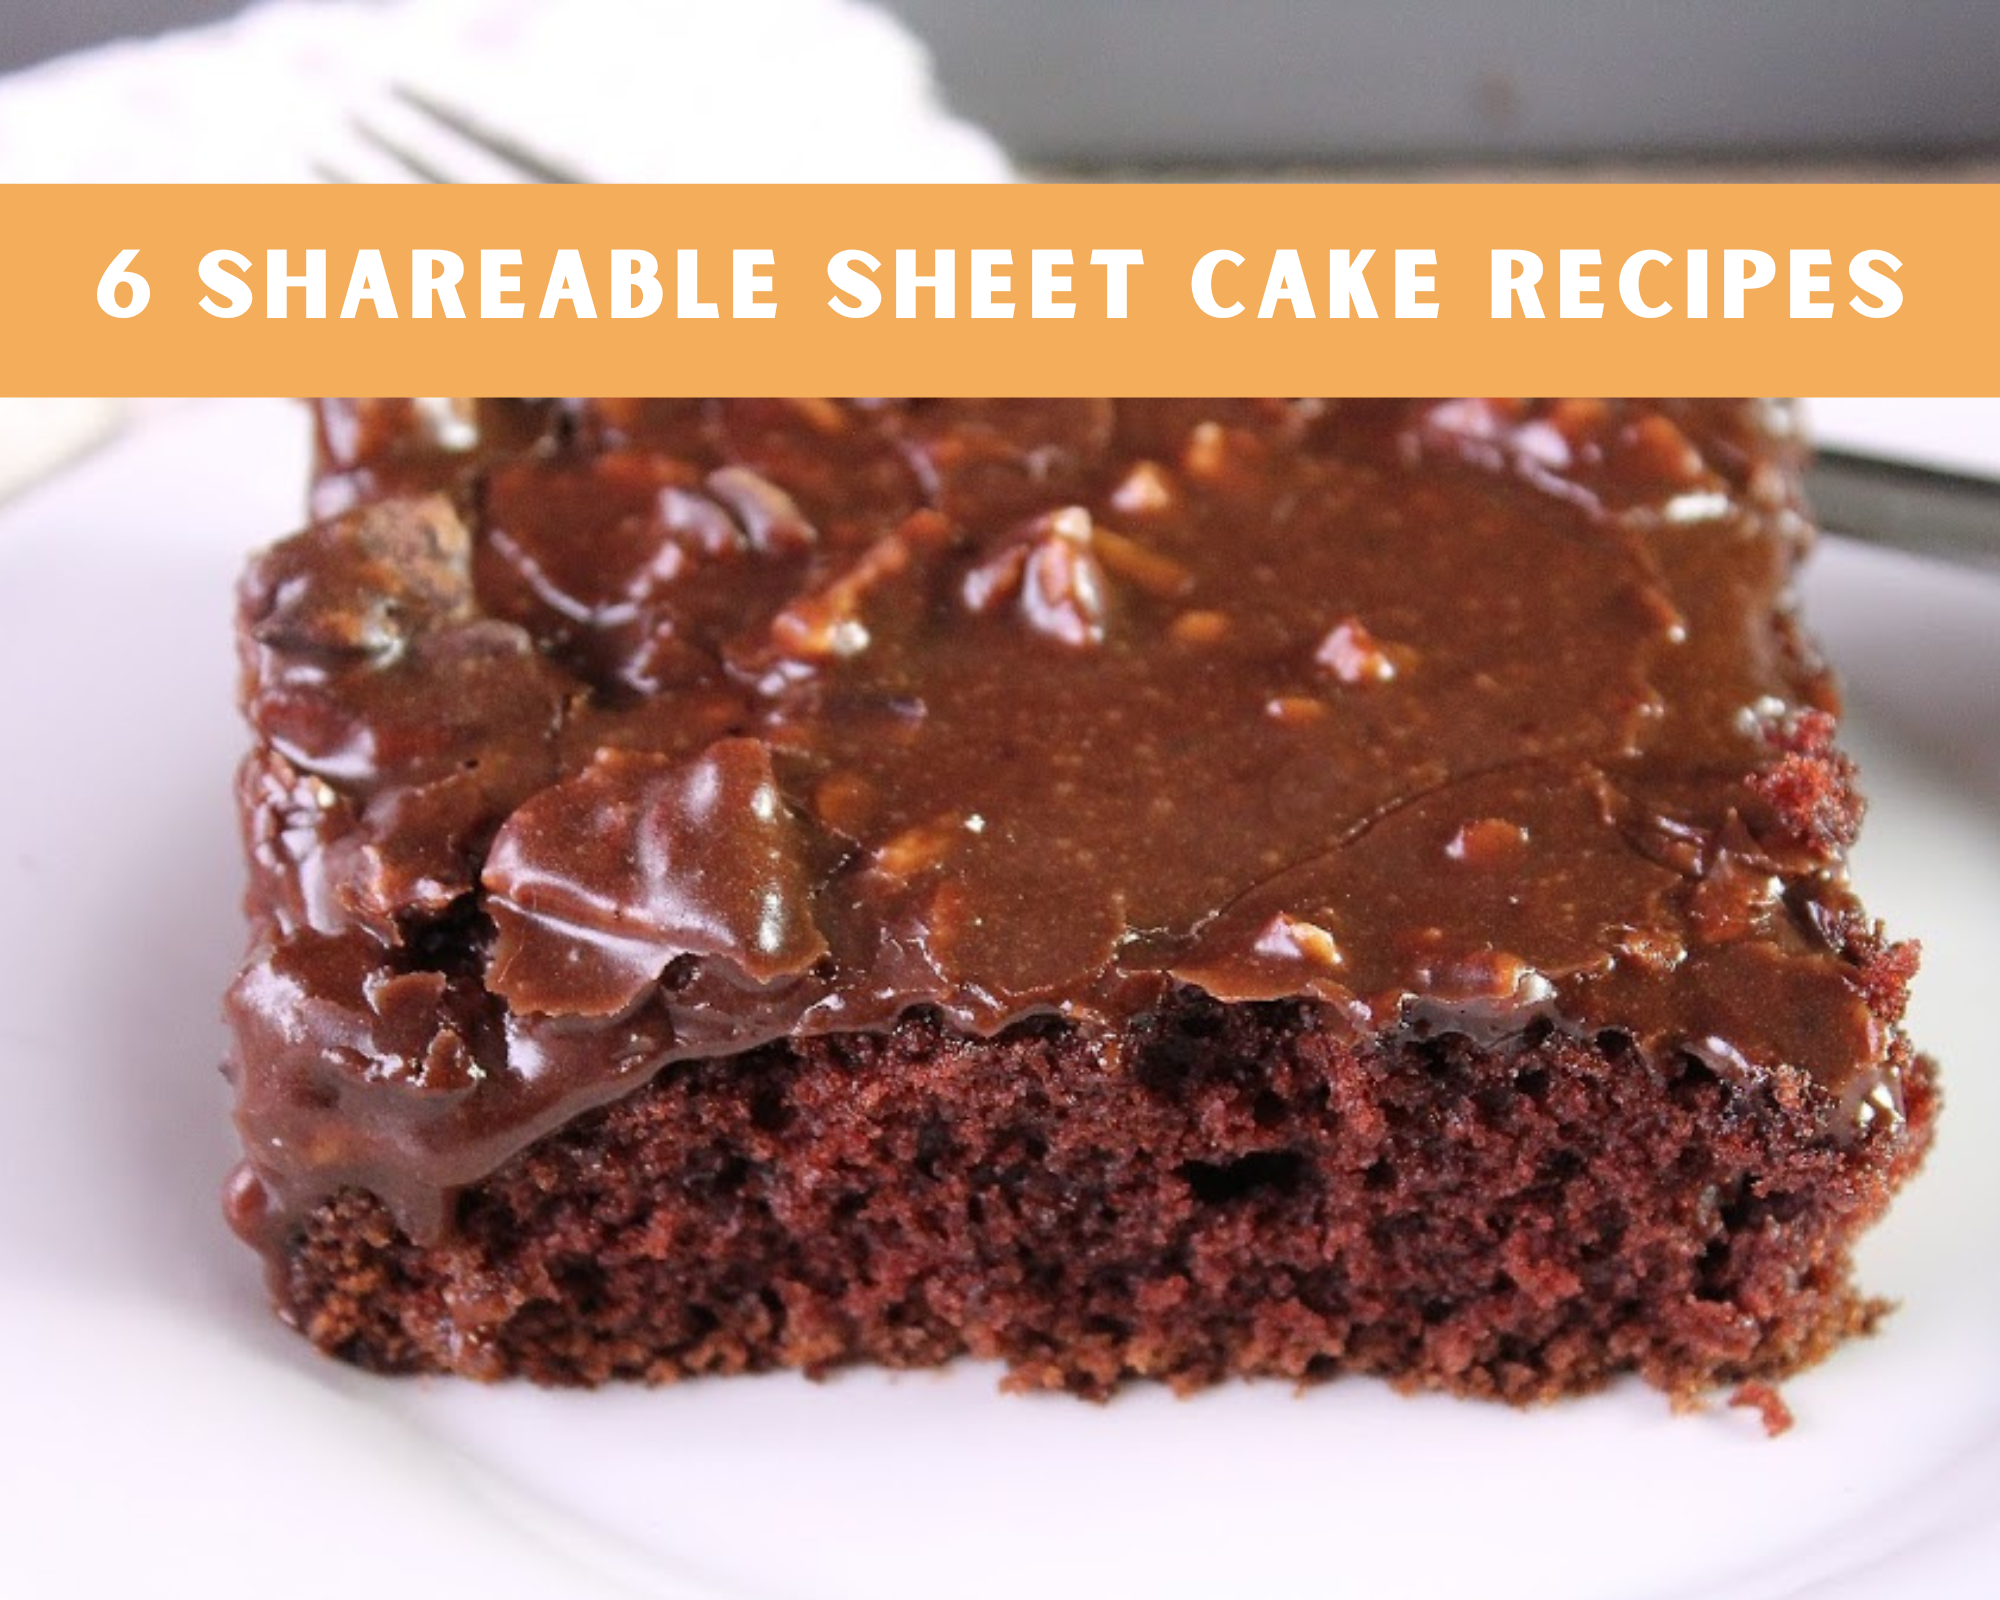 6 Shareable Sheet Cake Recipes